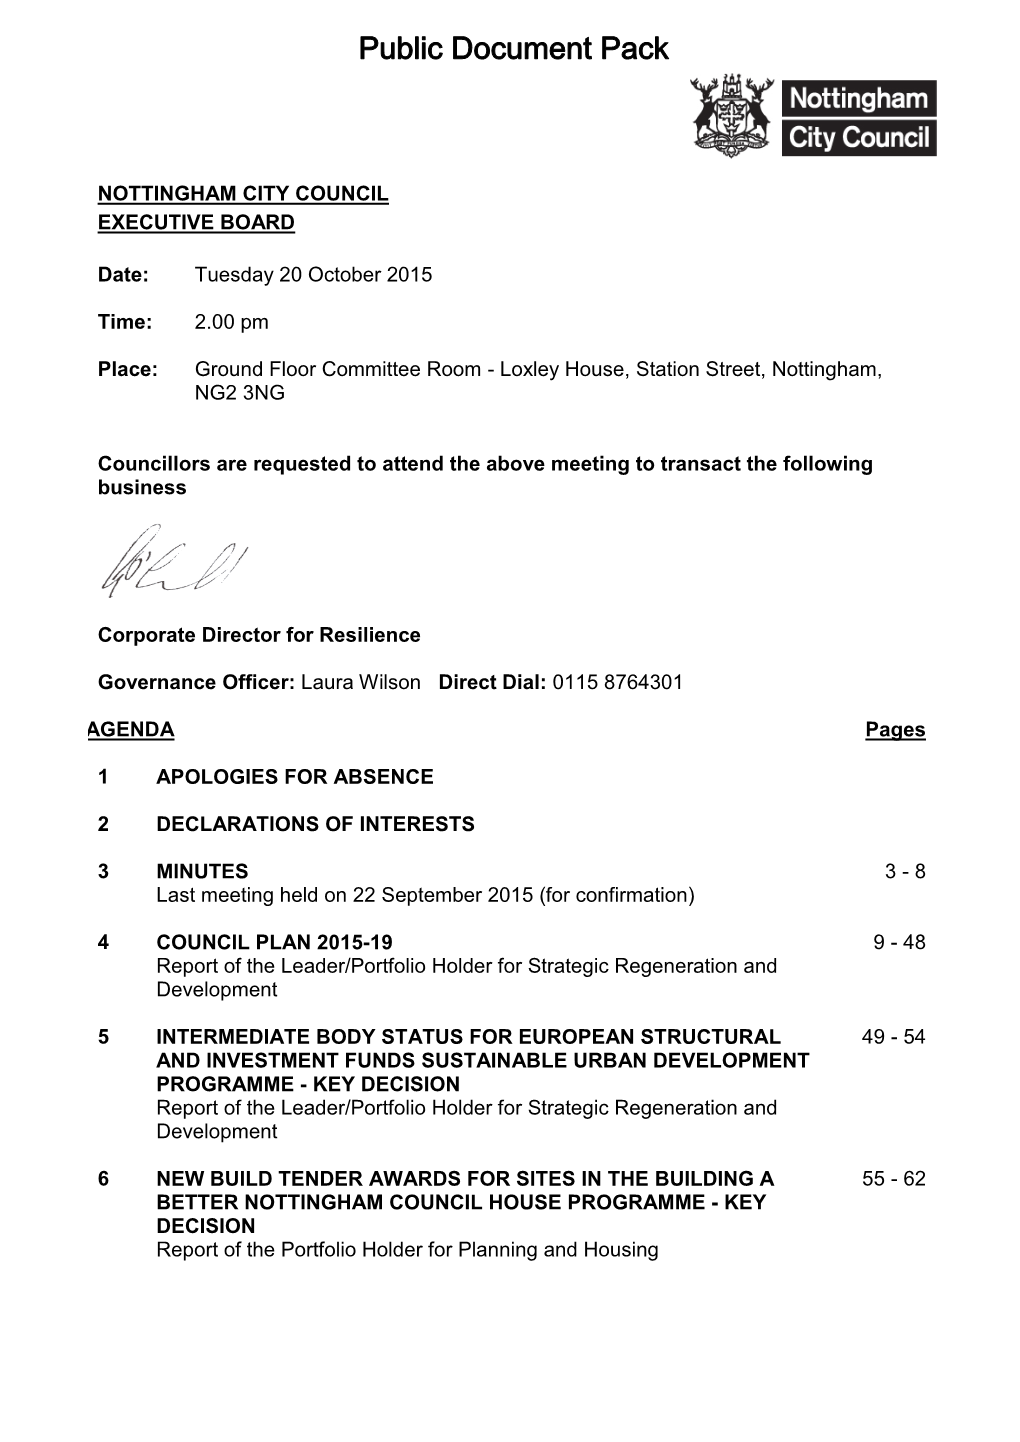 (Public Pack)Agenda Document for Executive Board, 20/10/2015 14:00